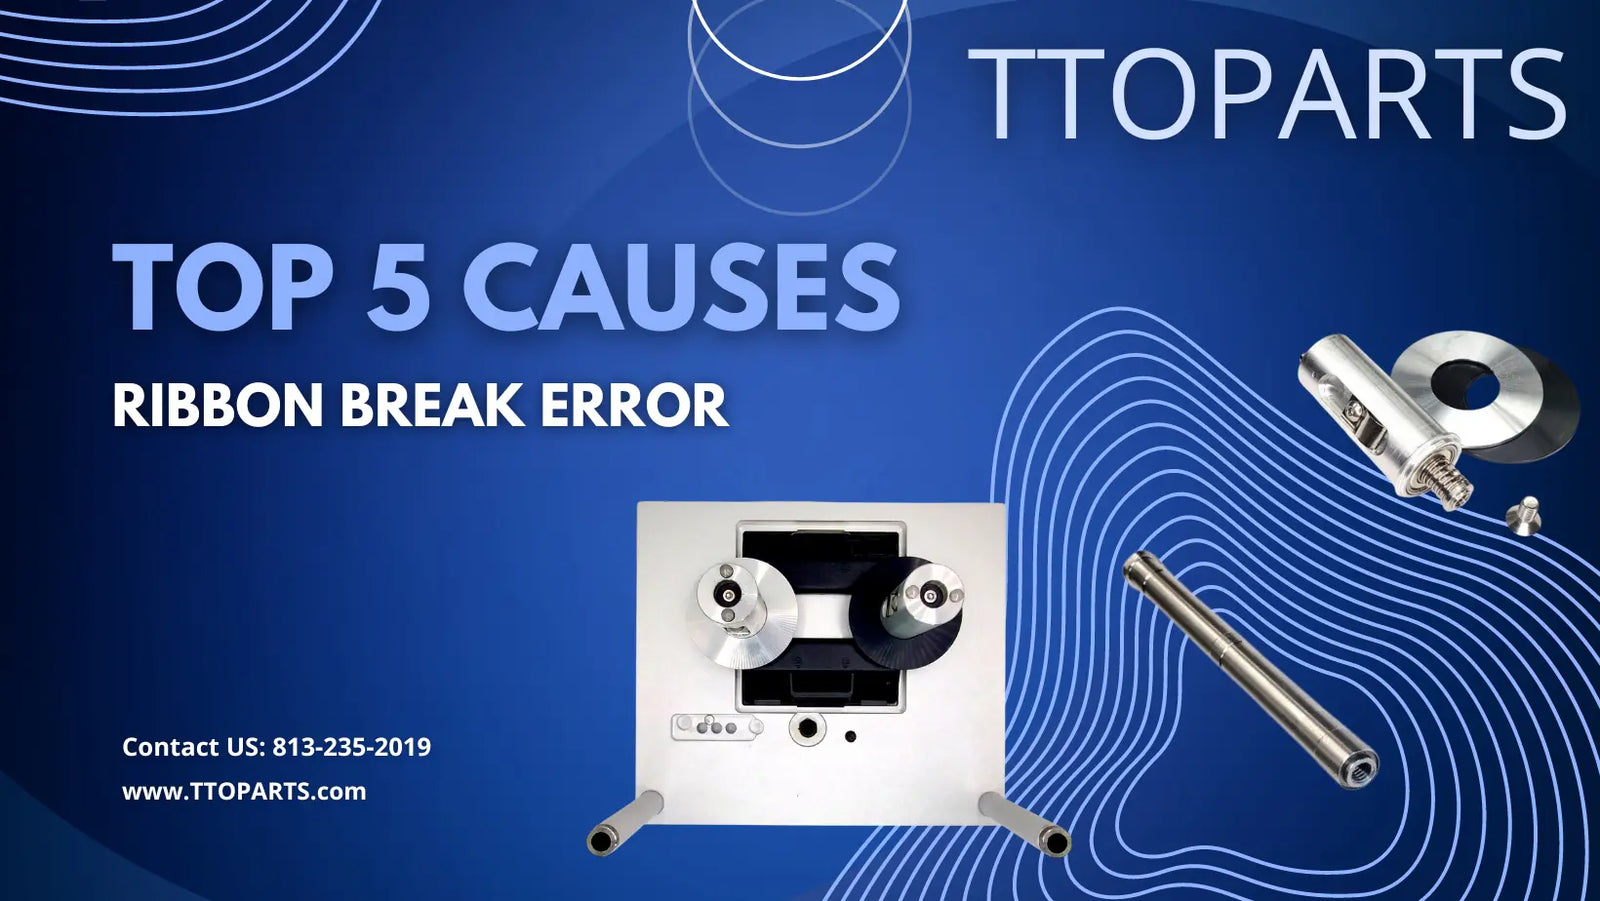 TTOParts Top 5 causes of ribbon break error Videojet 6530 Videojet 6330 Videojet 6420